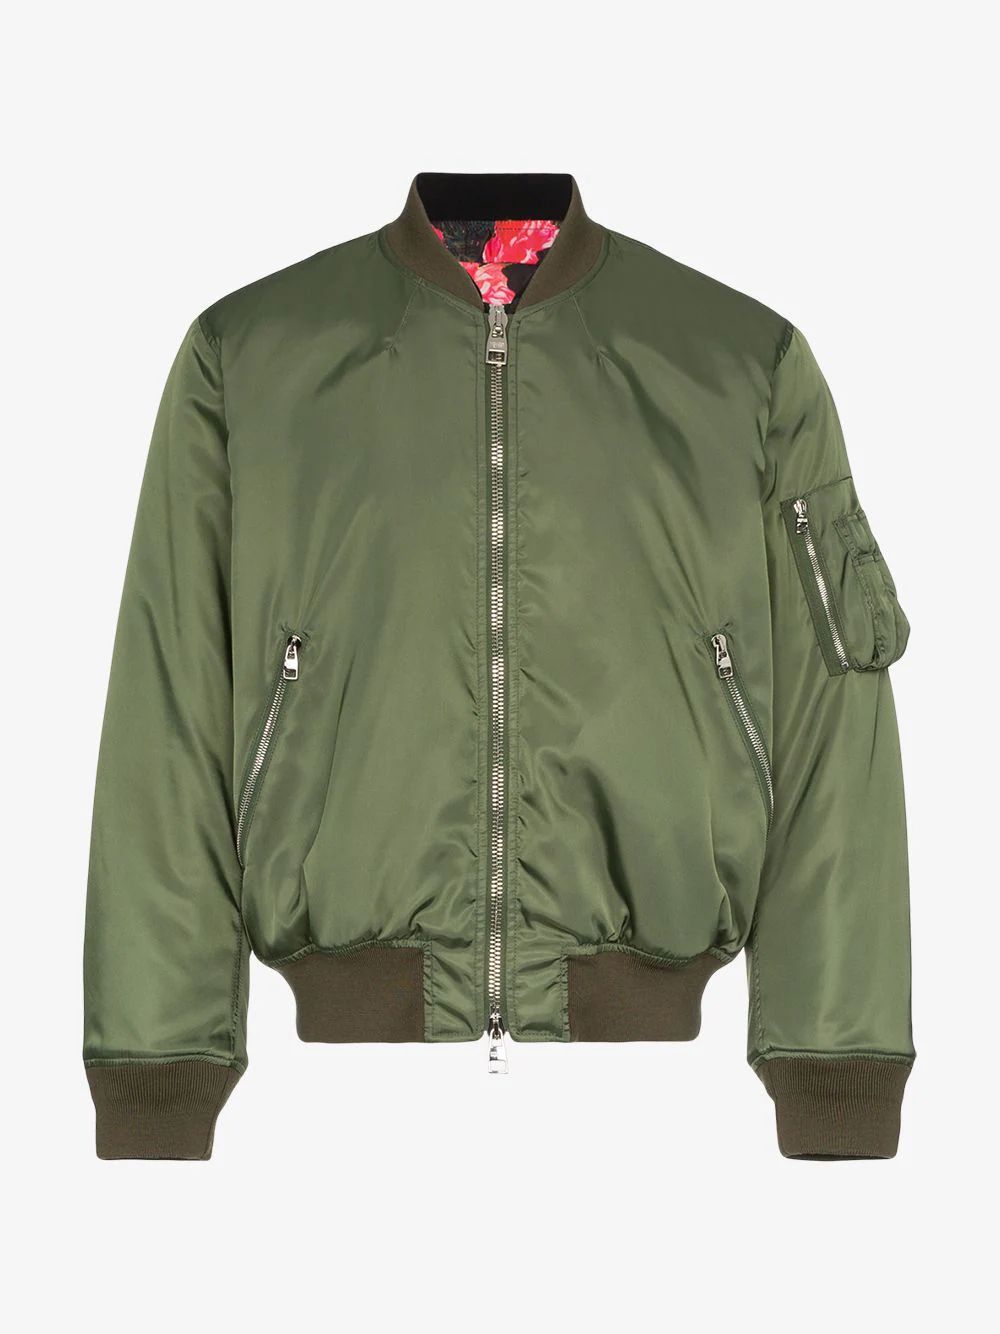 Alexander McQueen green bomber jacket | Browns Fashion